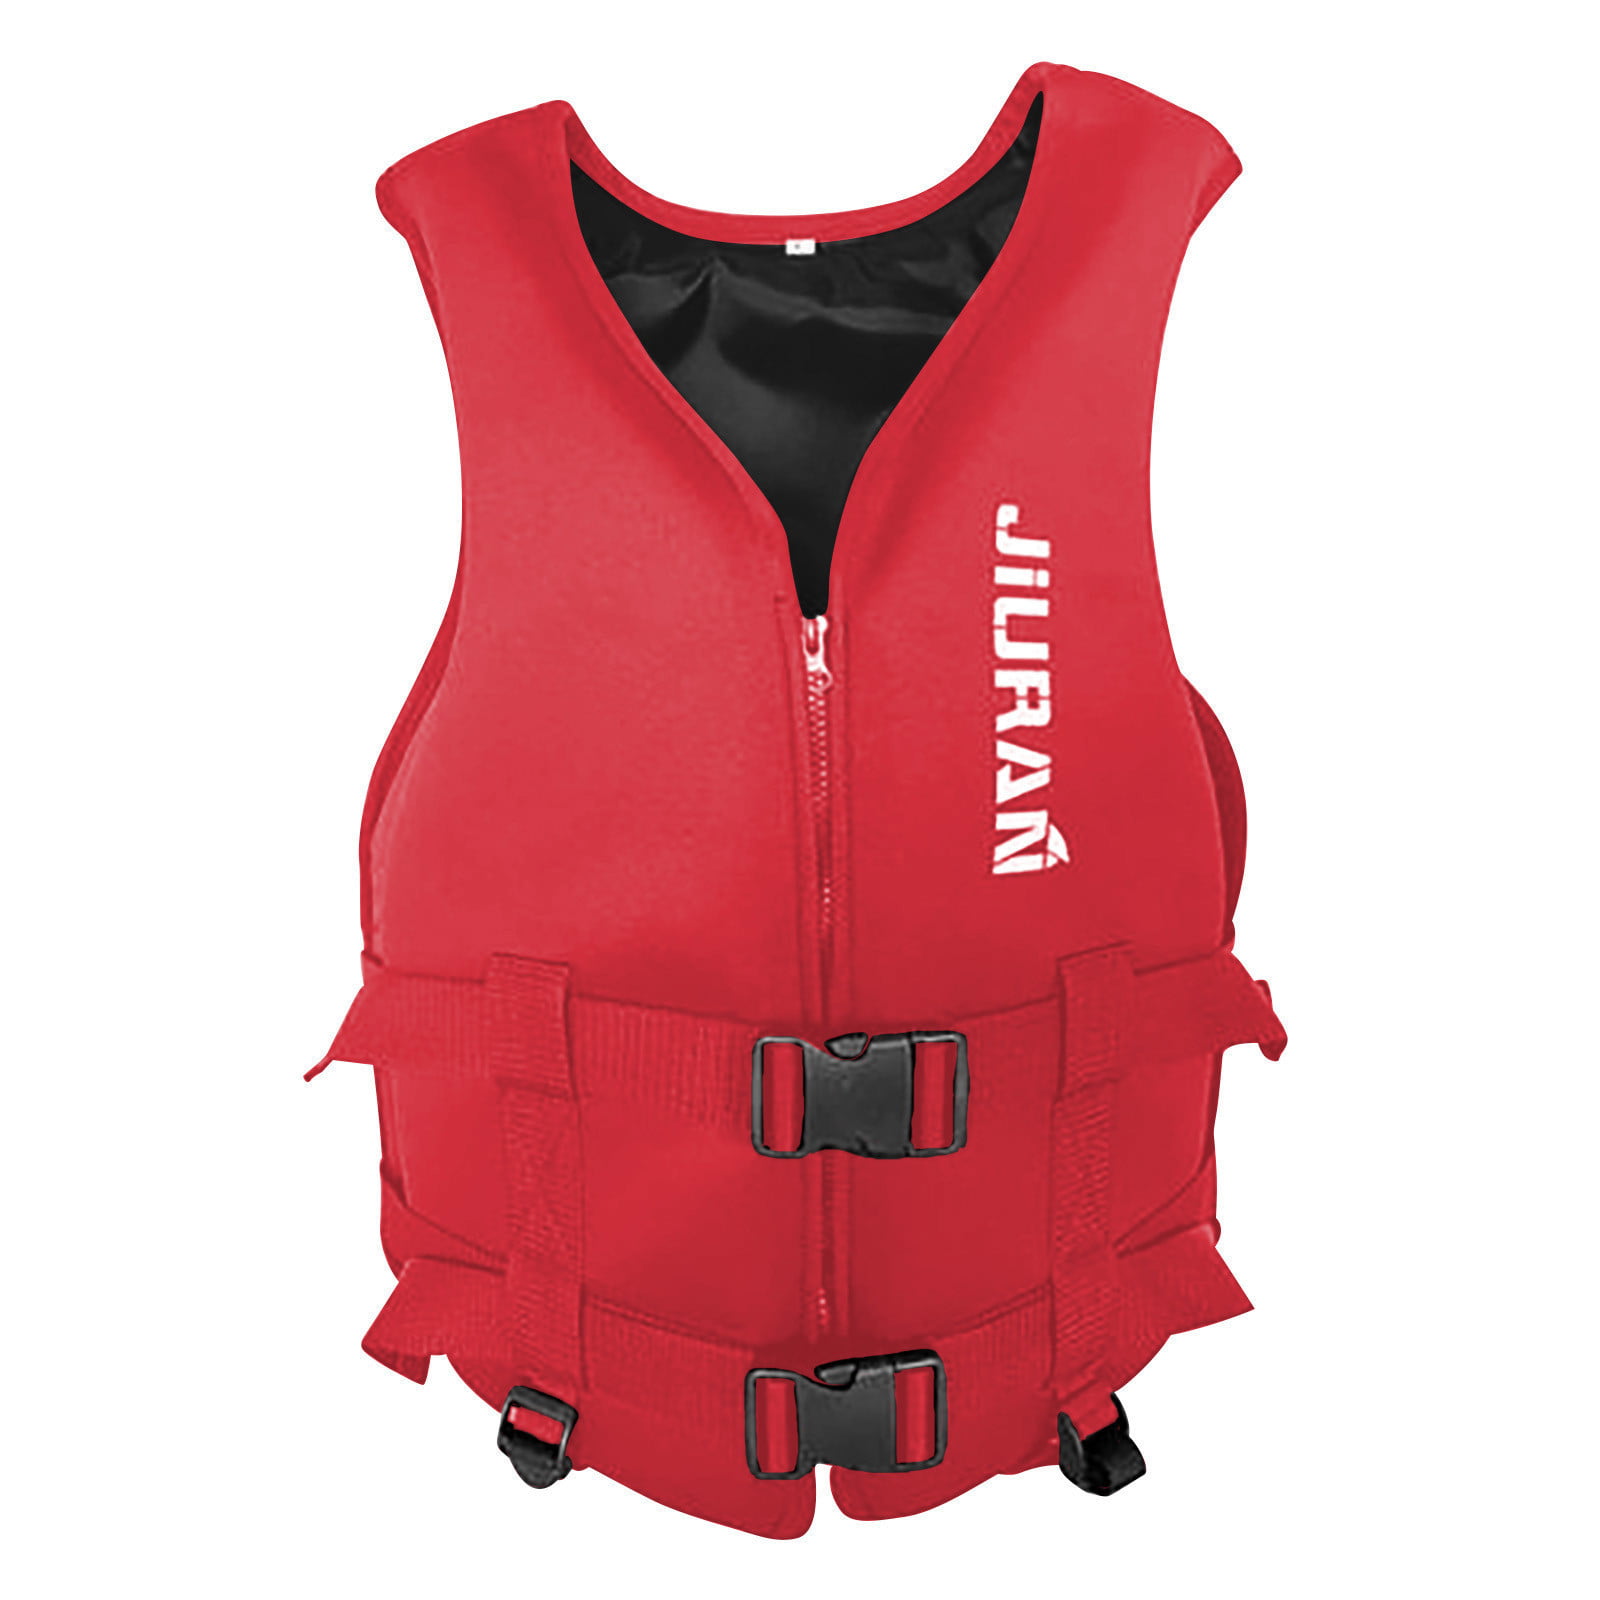 Adults Kids Life Jacket Swimming Fishing Floating Kayak Buoyancy Safety Aid Vest 